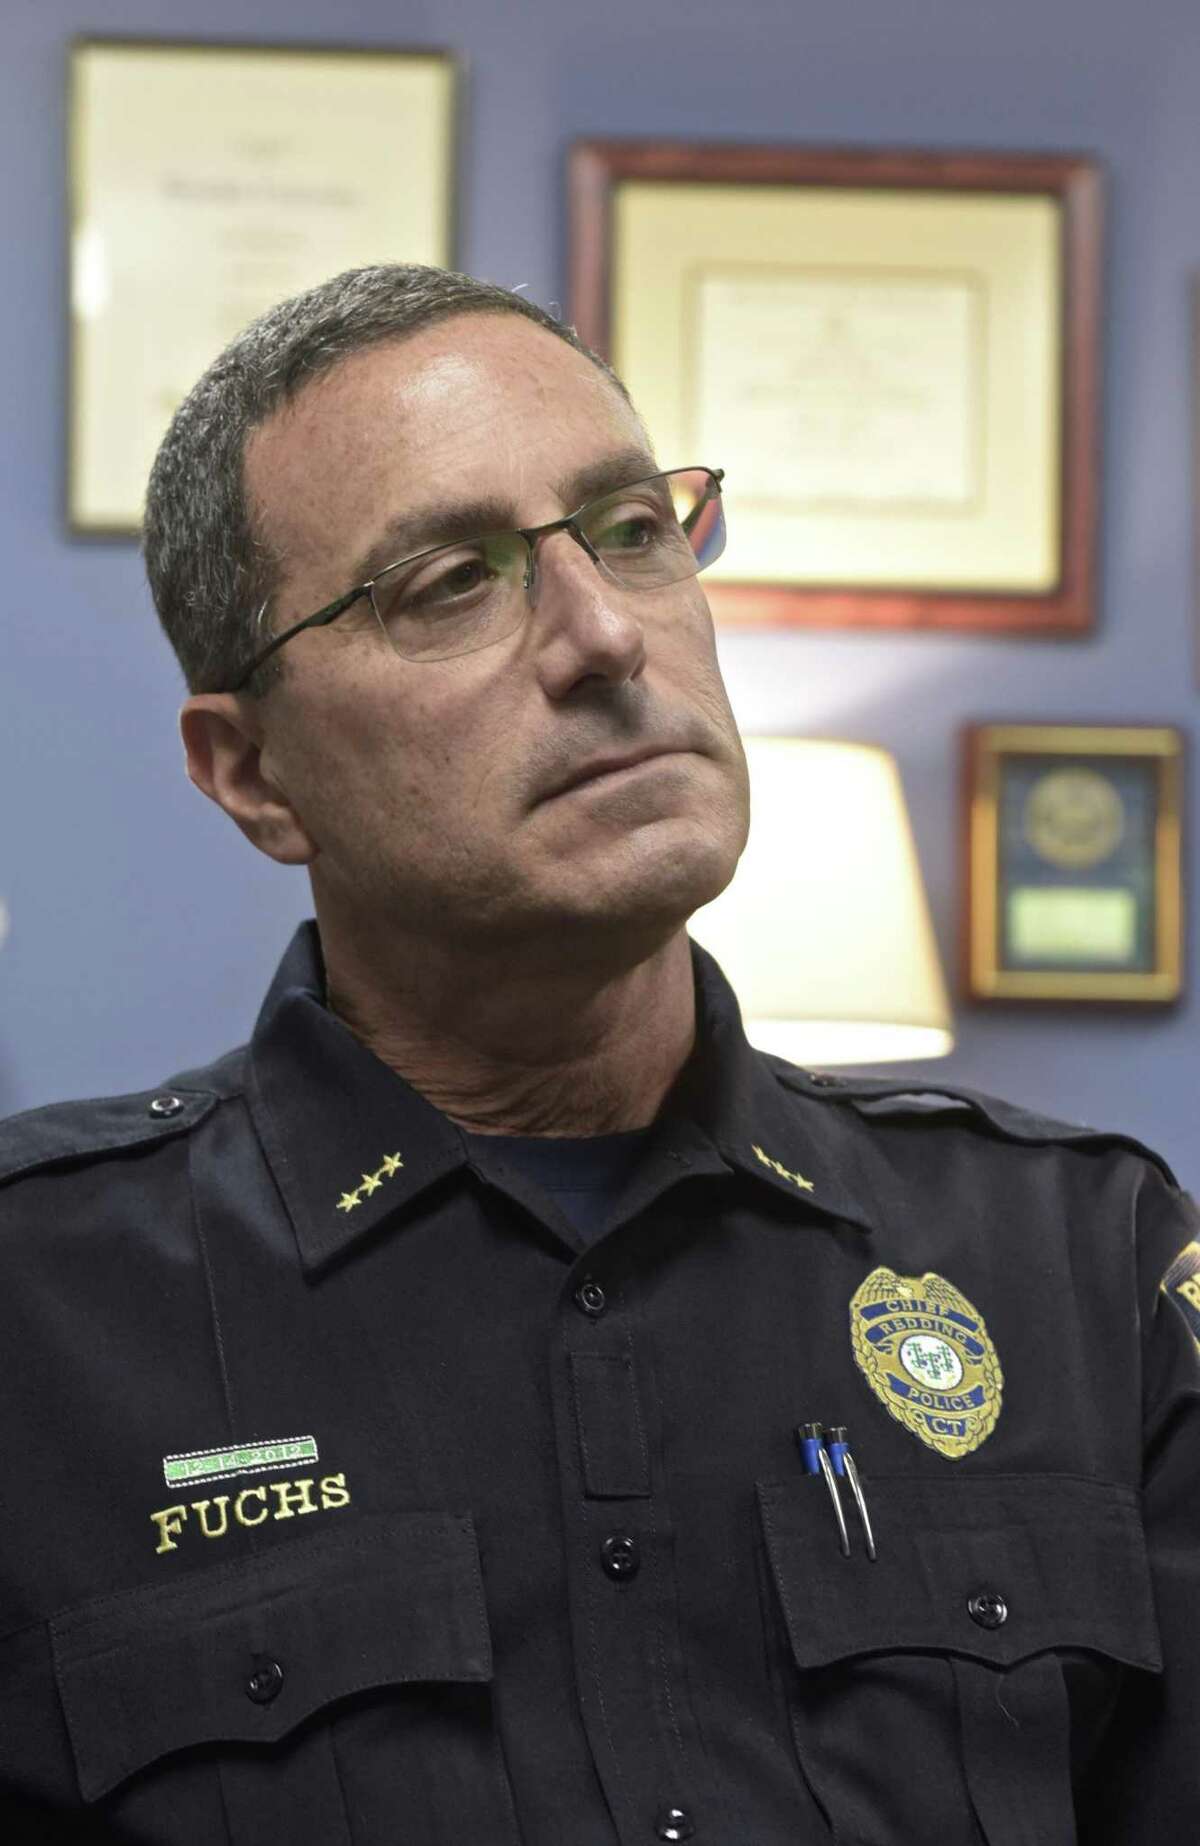 Redding Police Chief Doug Fuchs